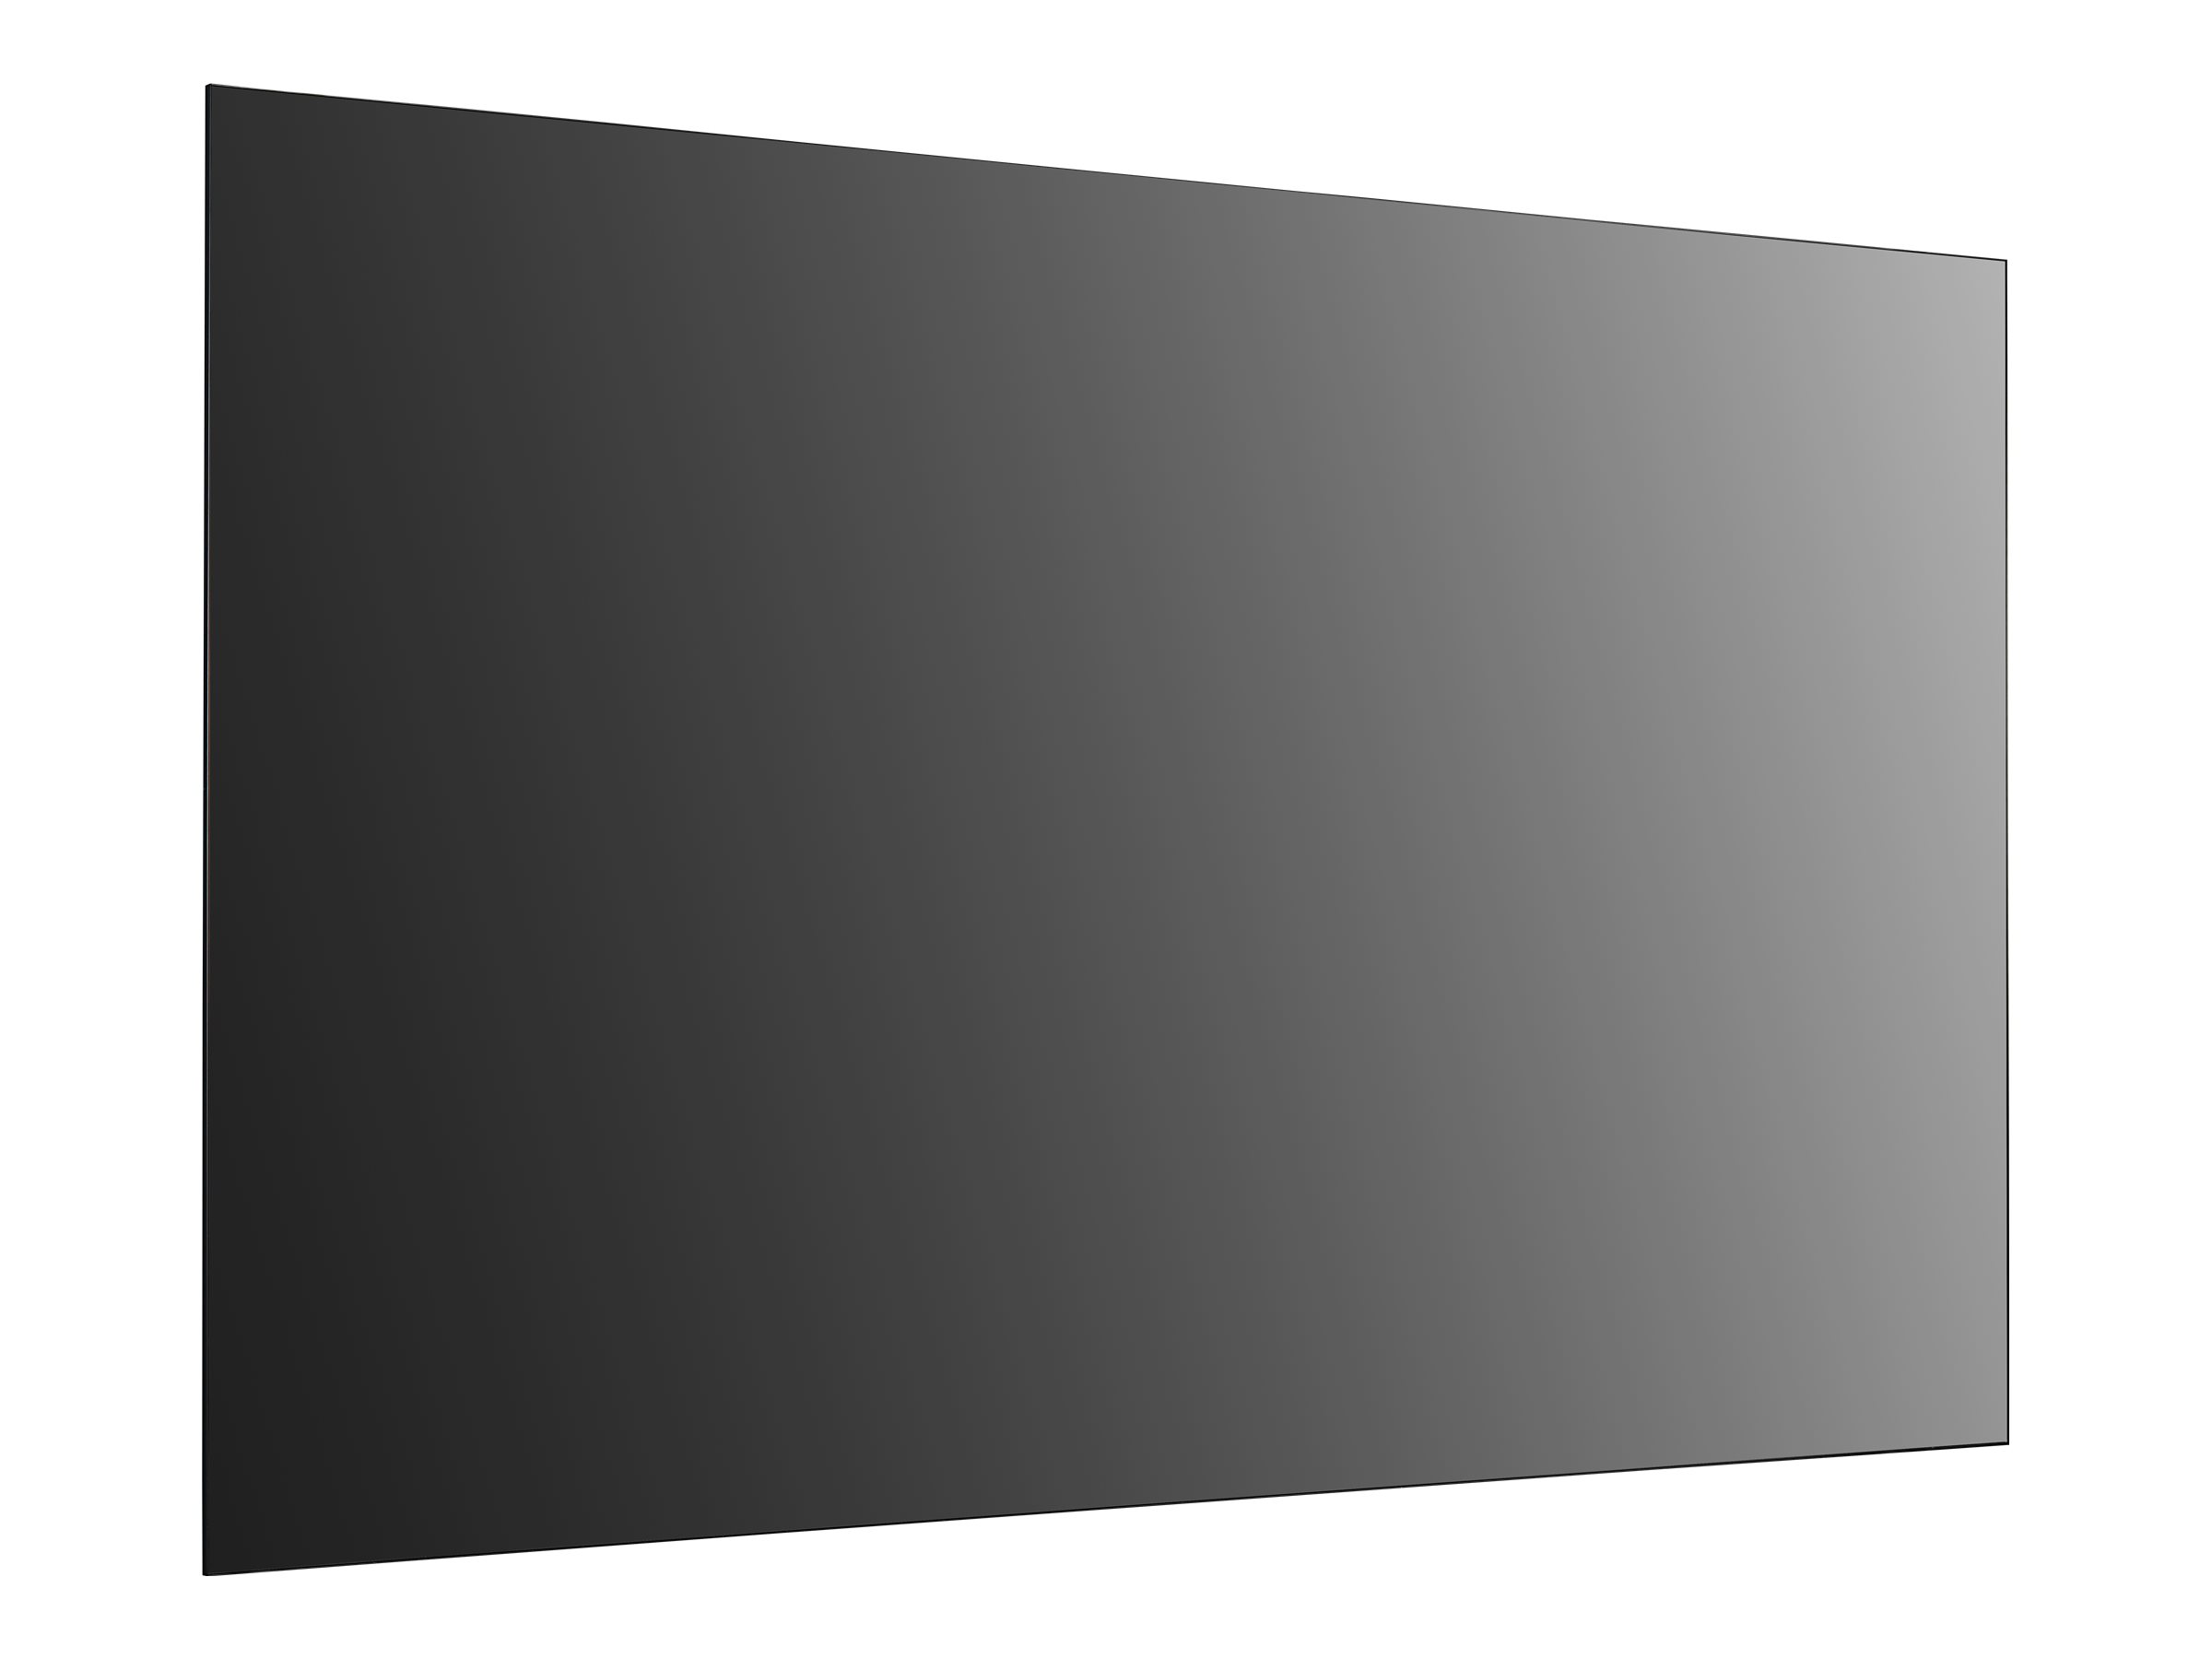 LG Wallpaper 55EJ5E - 55" Diagonal Class EJ5E Series OLED display - digital signage - 1080p (Full HD) 1920 x 1080 - black - image 4 of 7